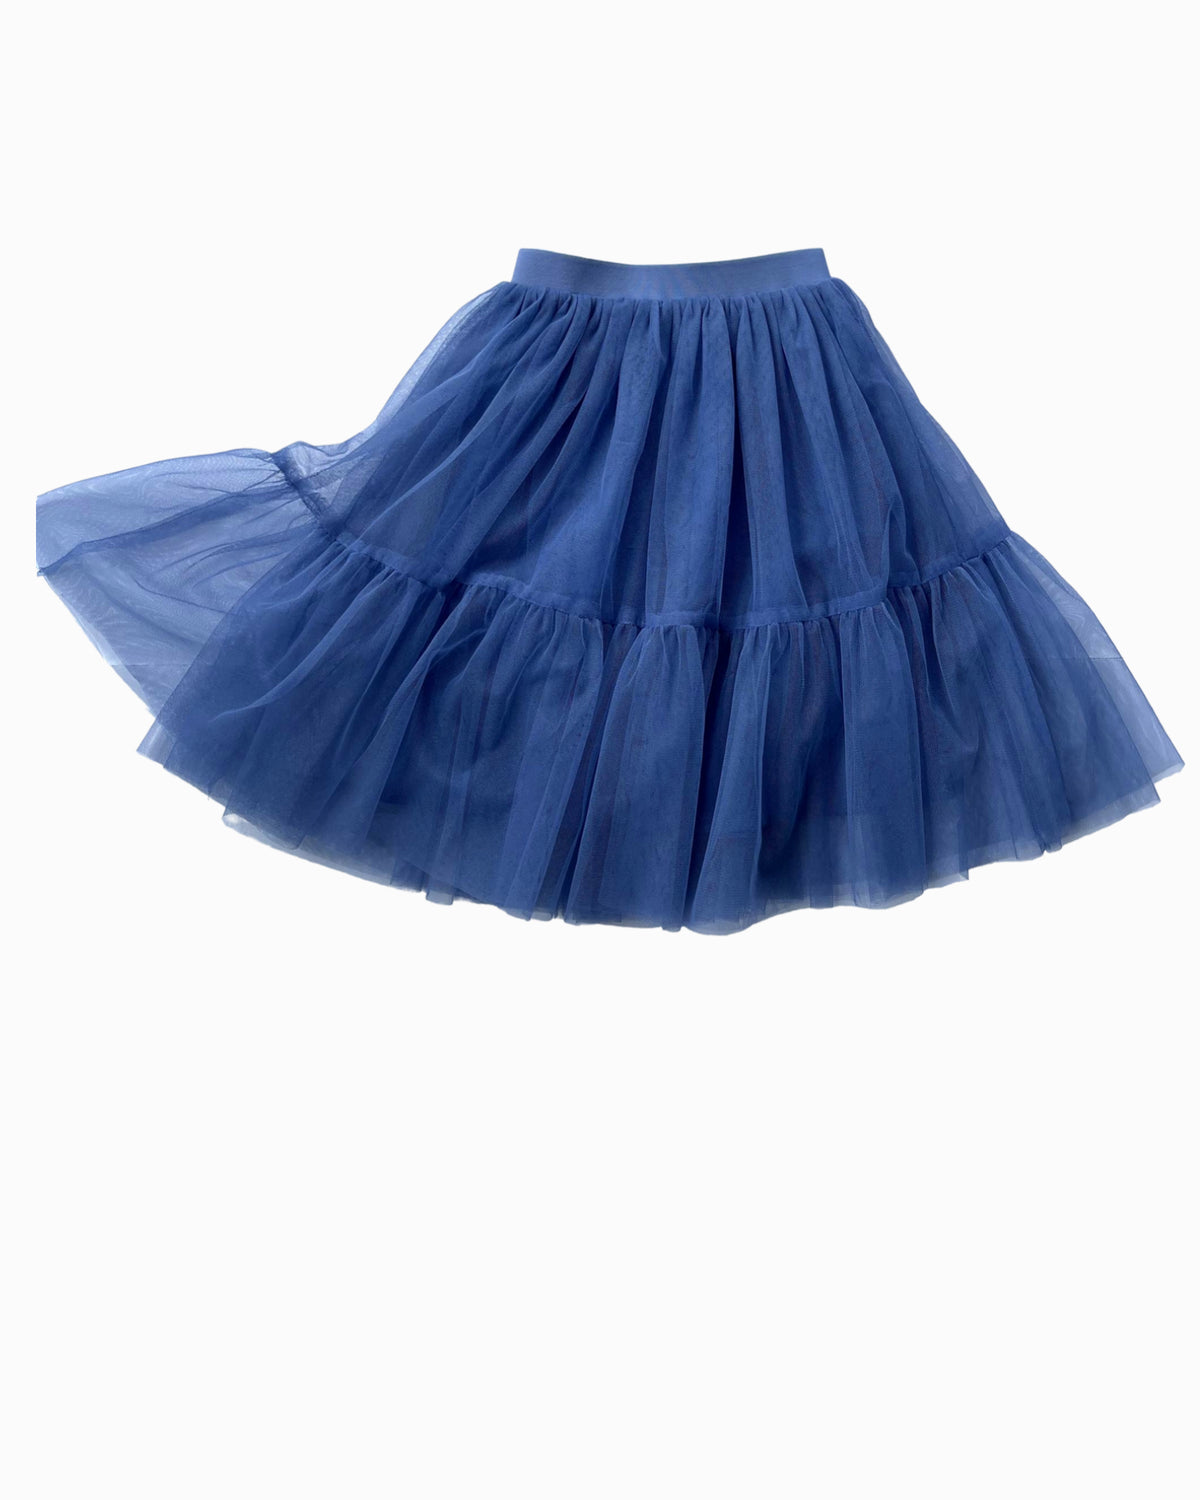 Tiered Tulle Long Skirt in Cornflower